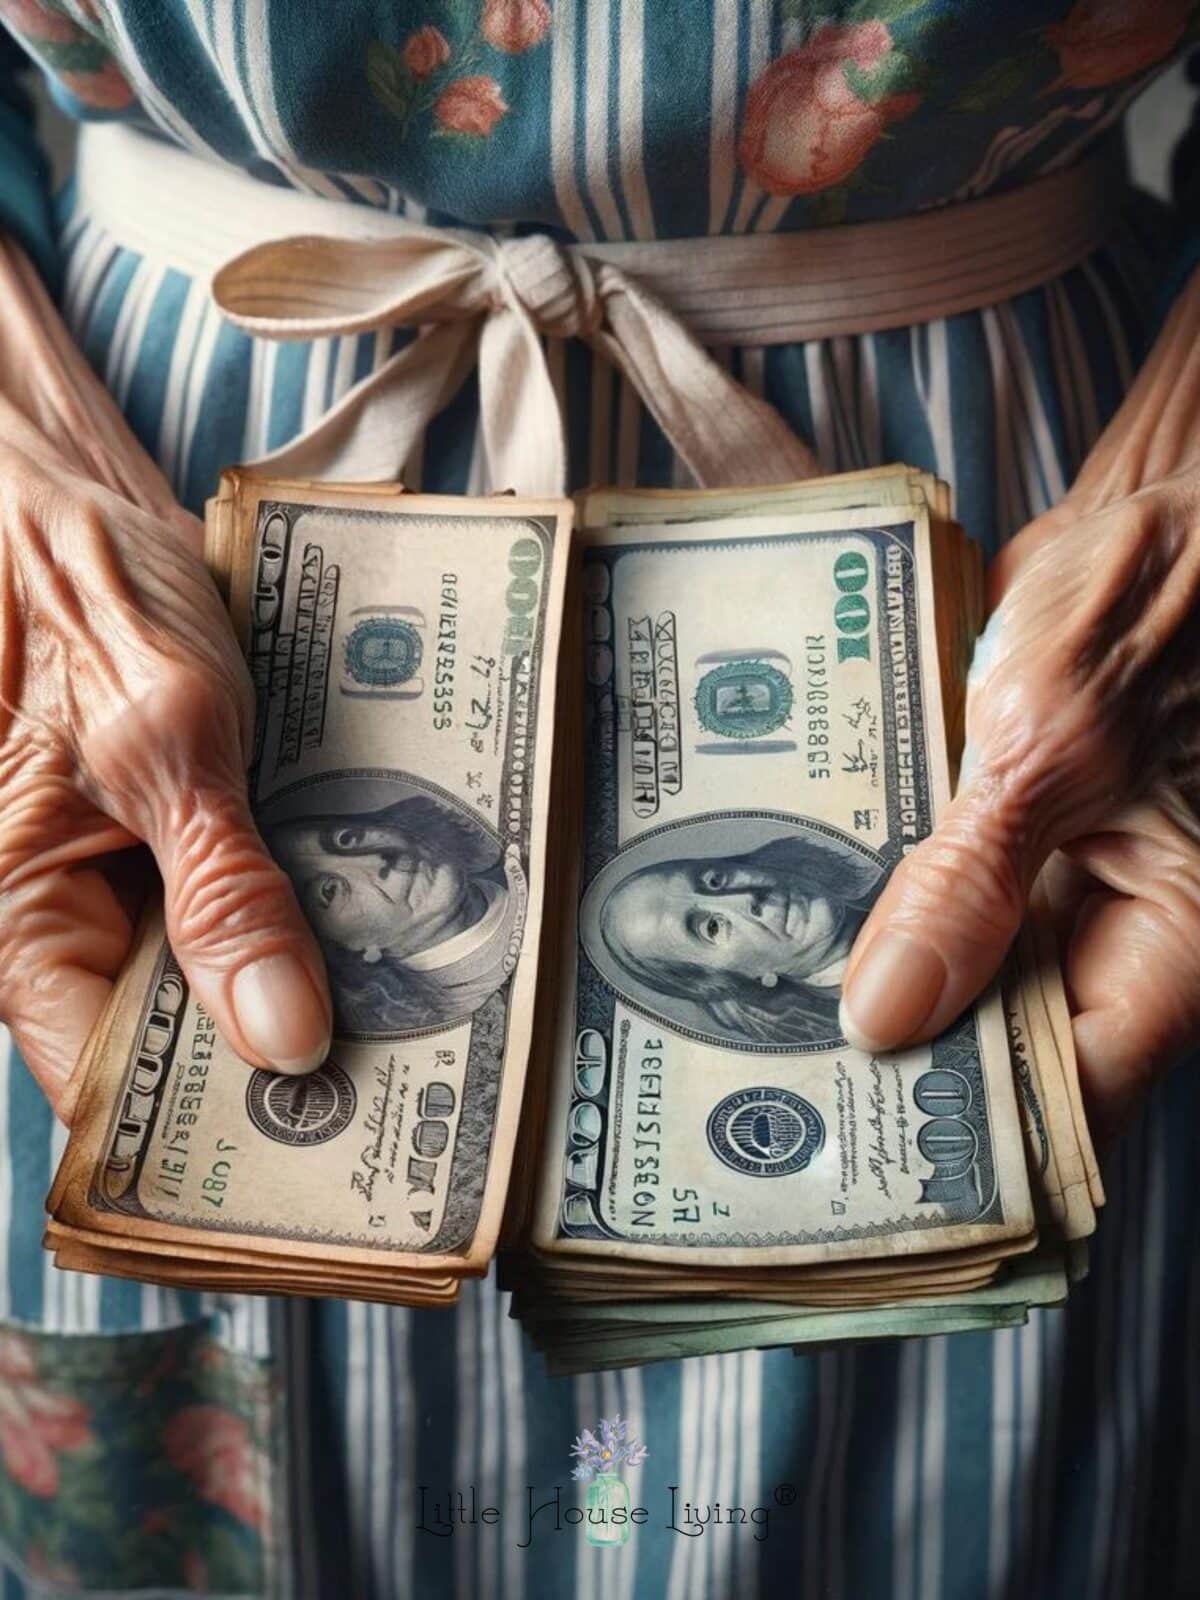 Grandmothers hands around some money.